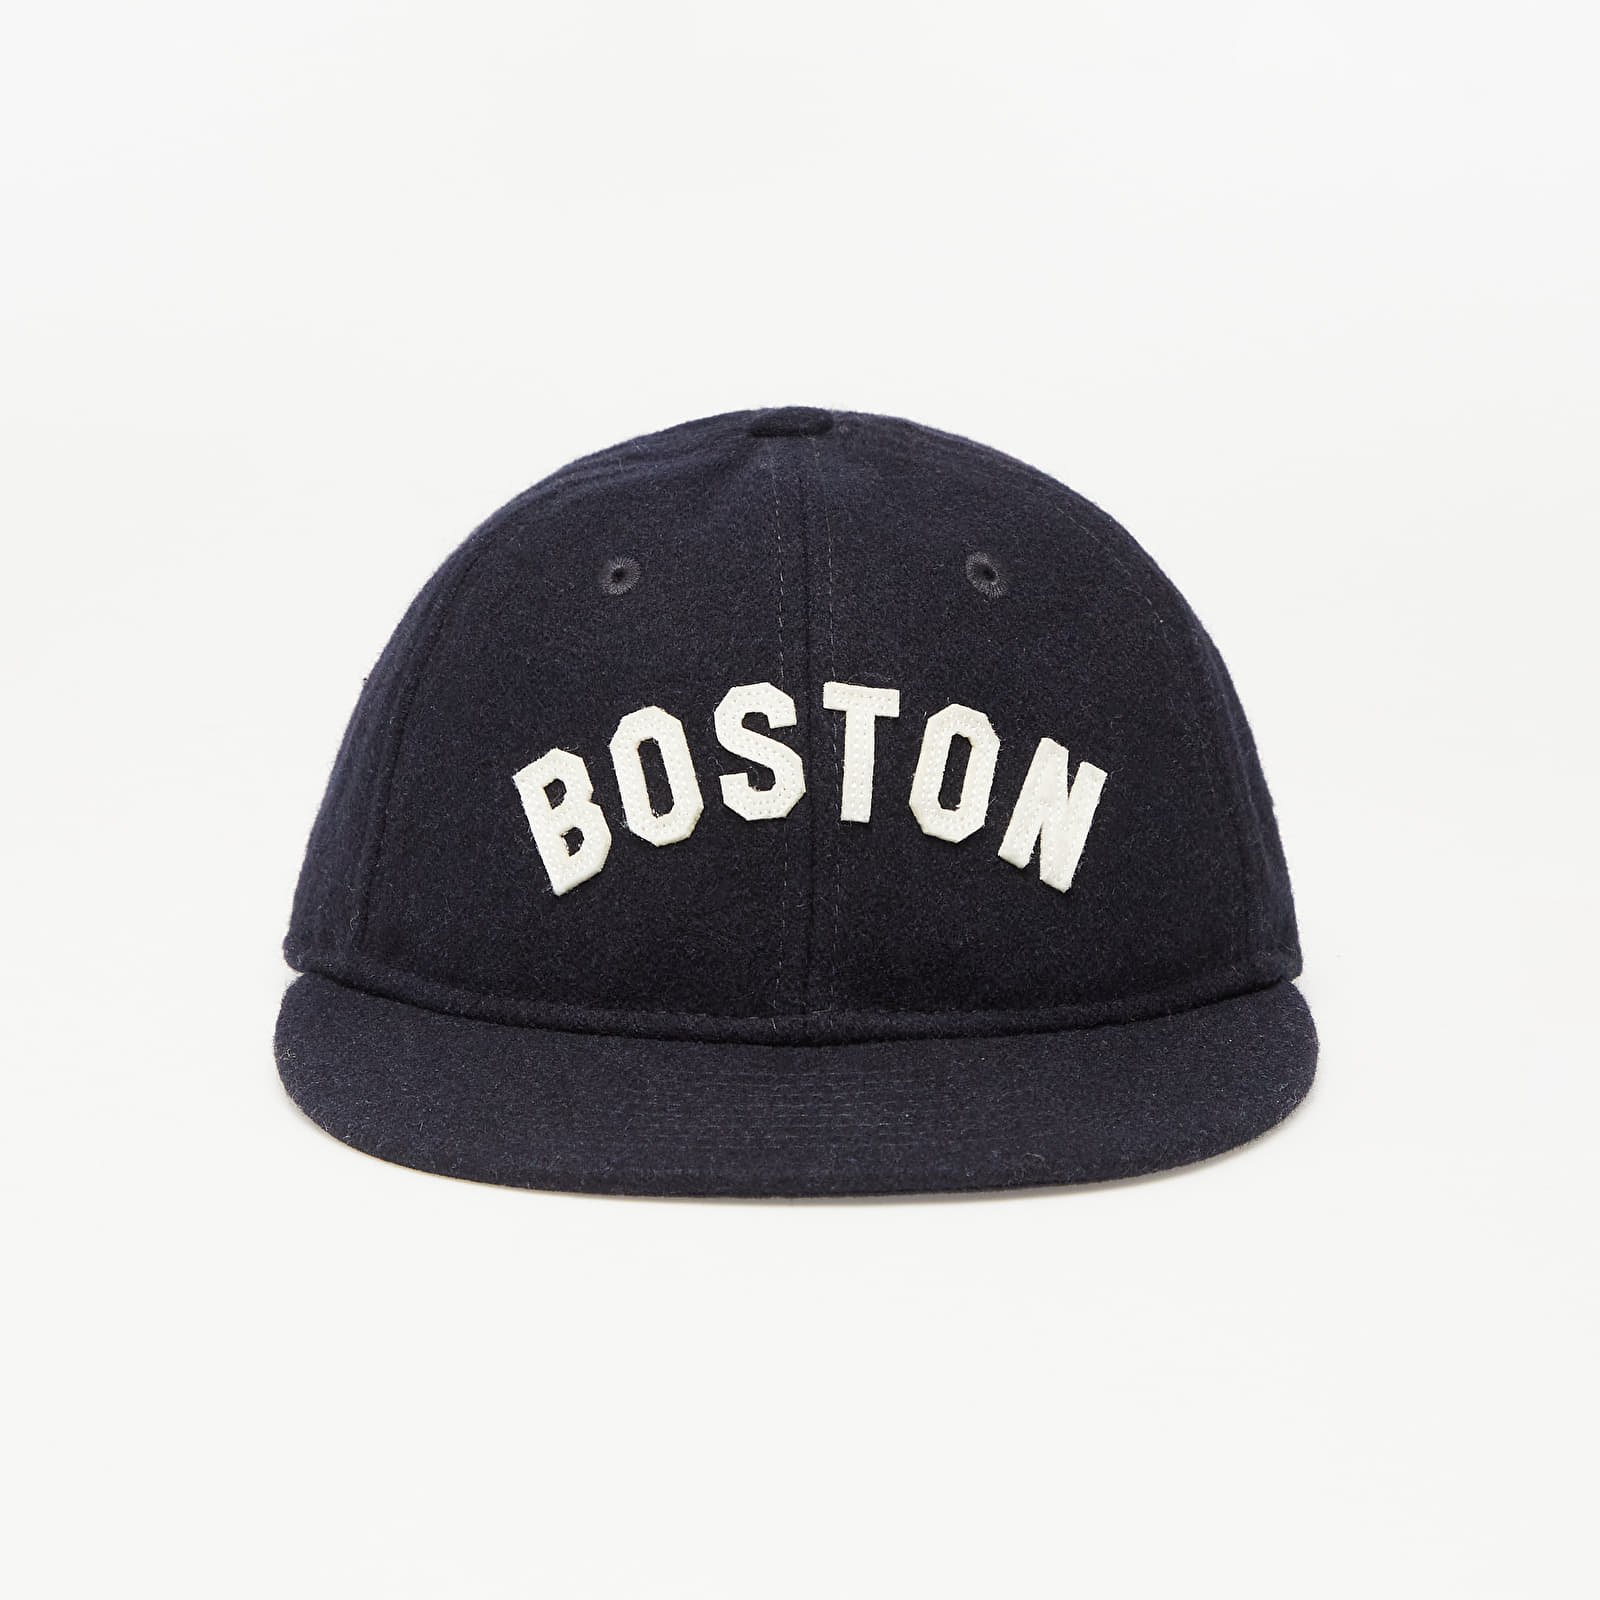 Caps New Era 9Fifty Boston Red Sox Cooperstown Navy Retro Crown Cap Navy